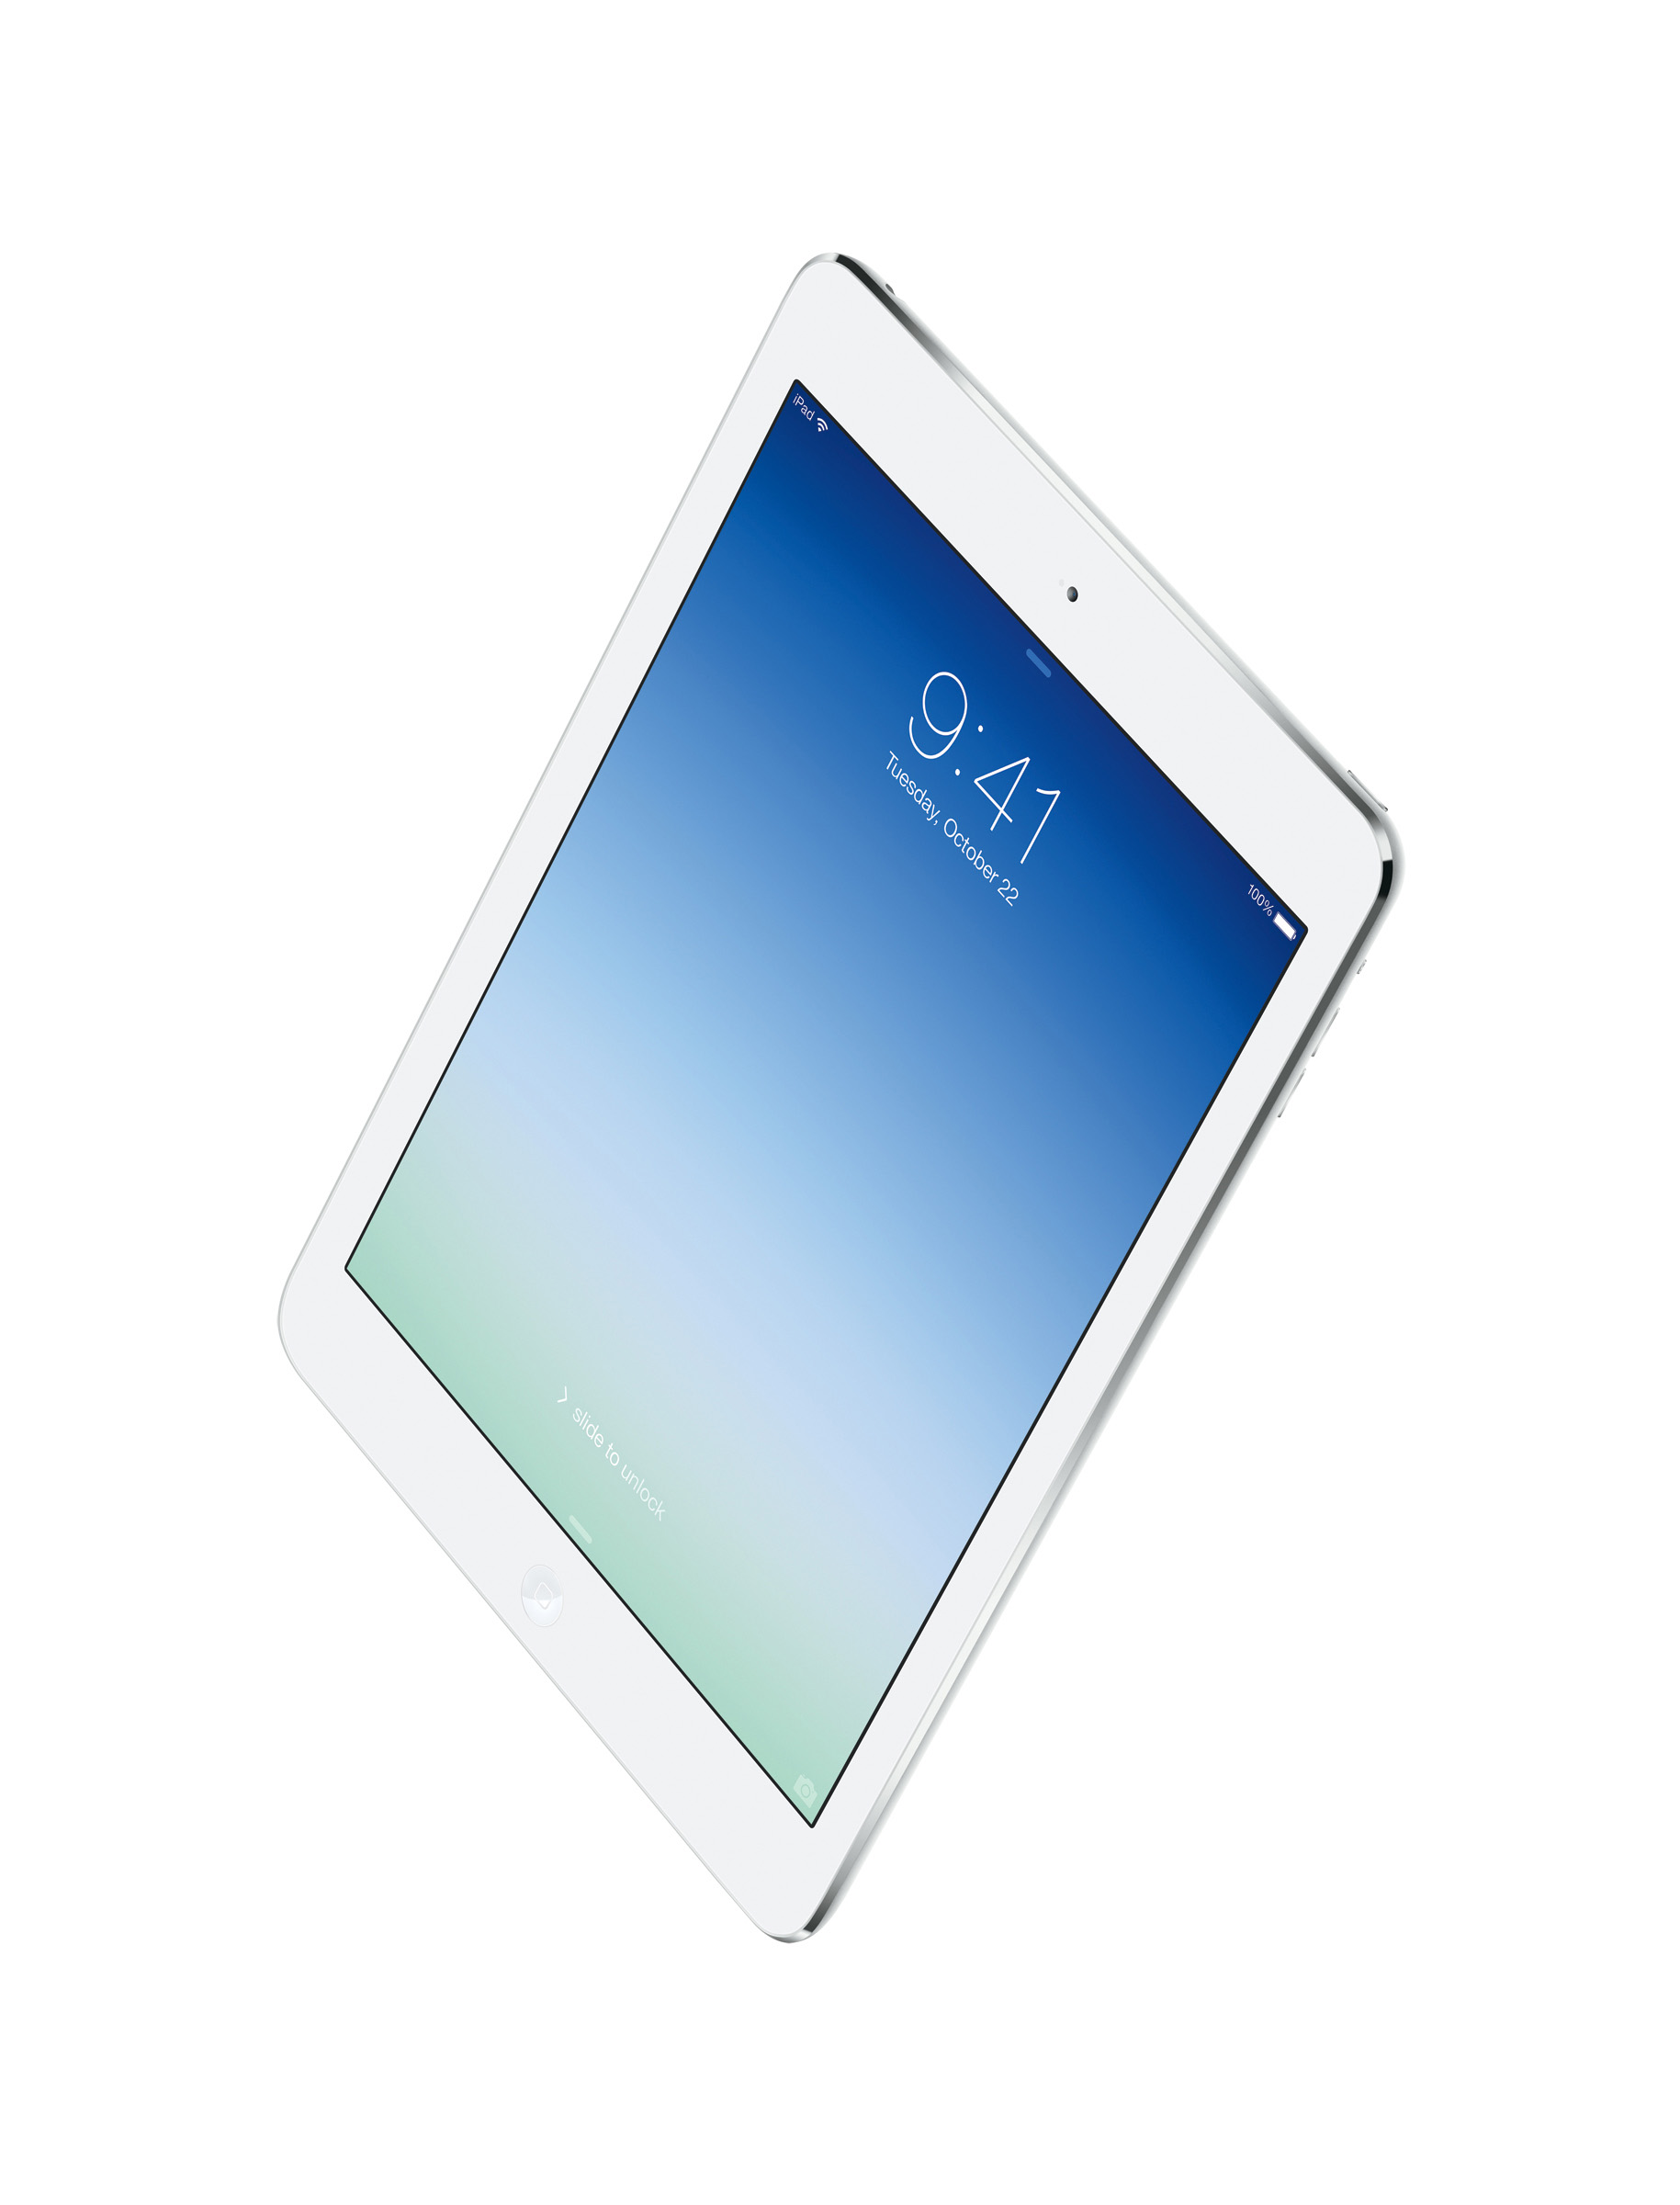 Apple iPad Air ME999LL/A Tablet, 9.7" QXGA, Apple A7, 16 GB Storage, iOS 7, Silver - image 3 of 4